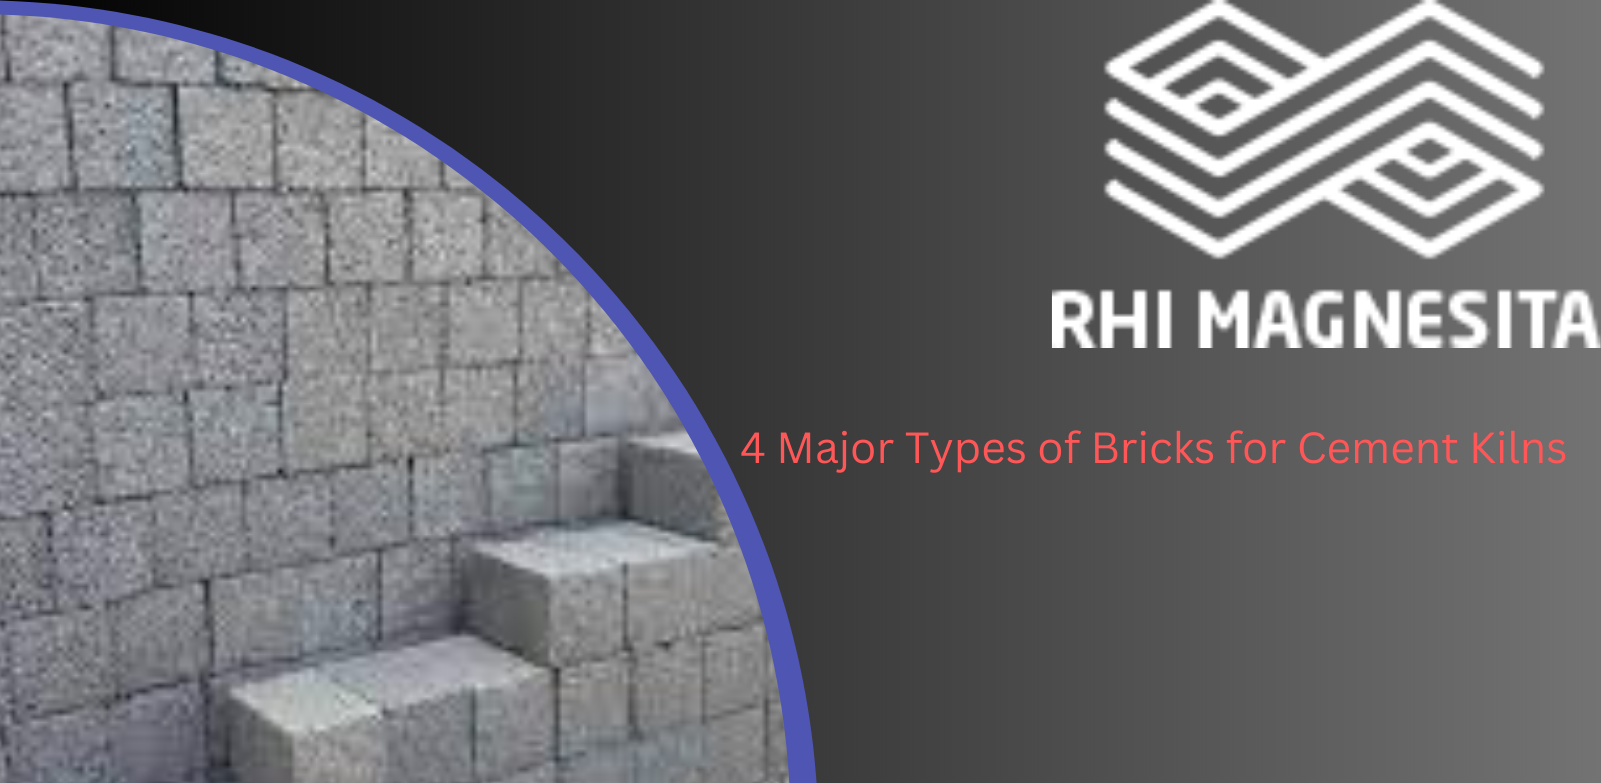 4 Major Types of Bricks for Cement Kilns